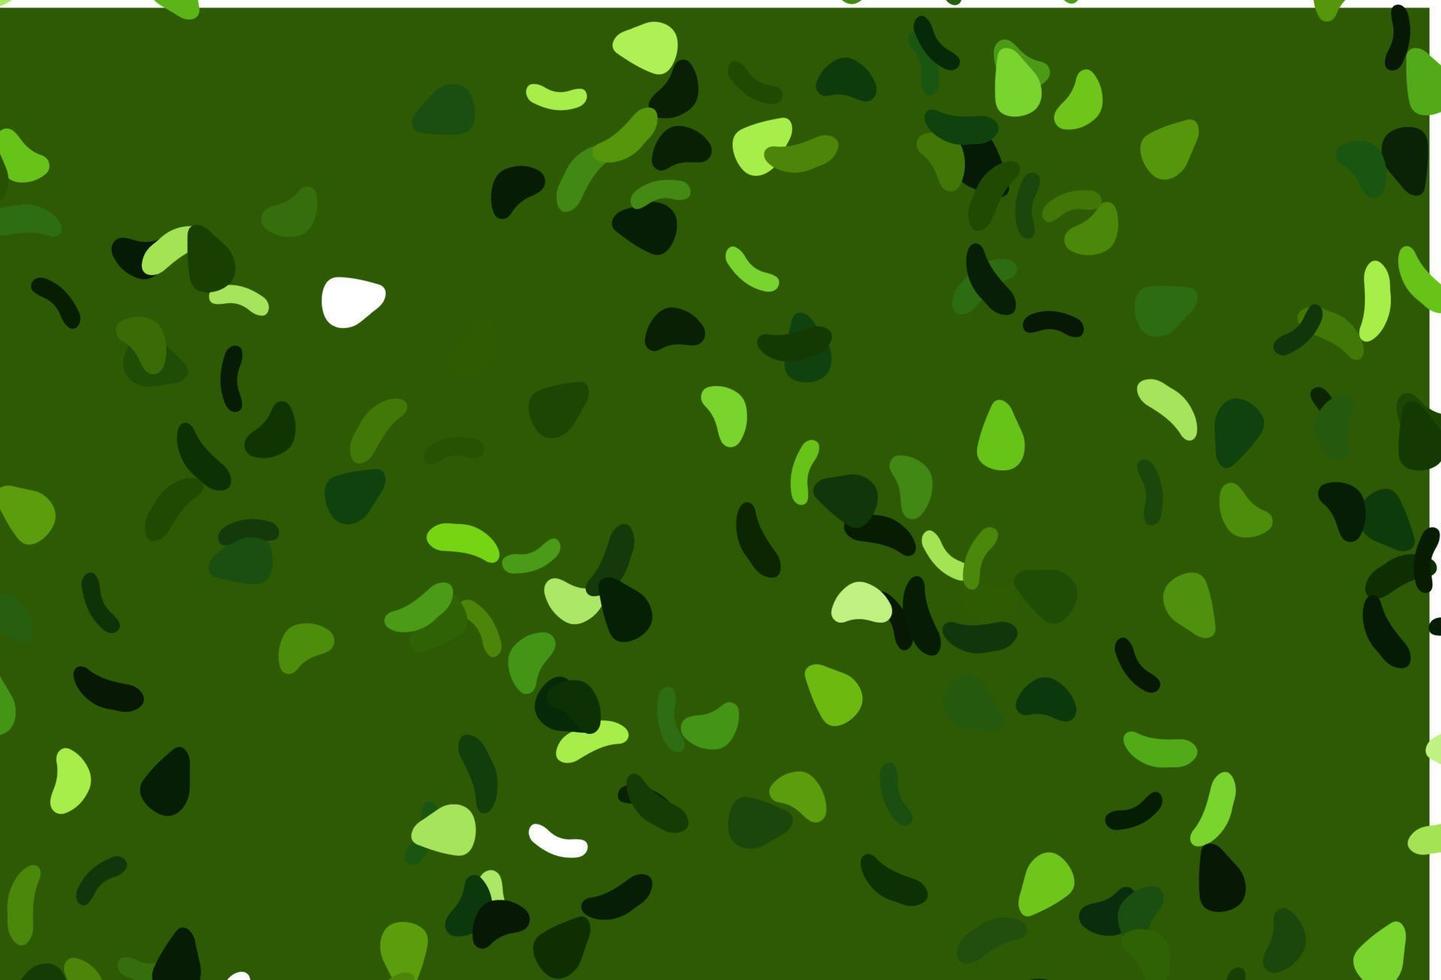 Telón de fondo de vector verde claro con formas abstractas.